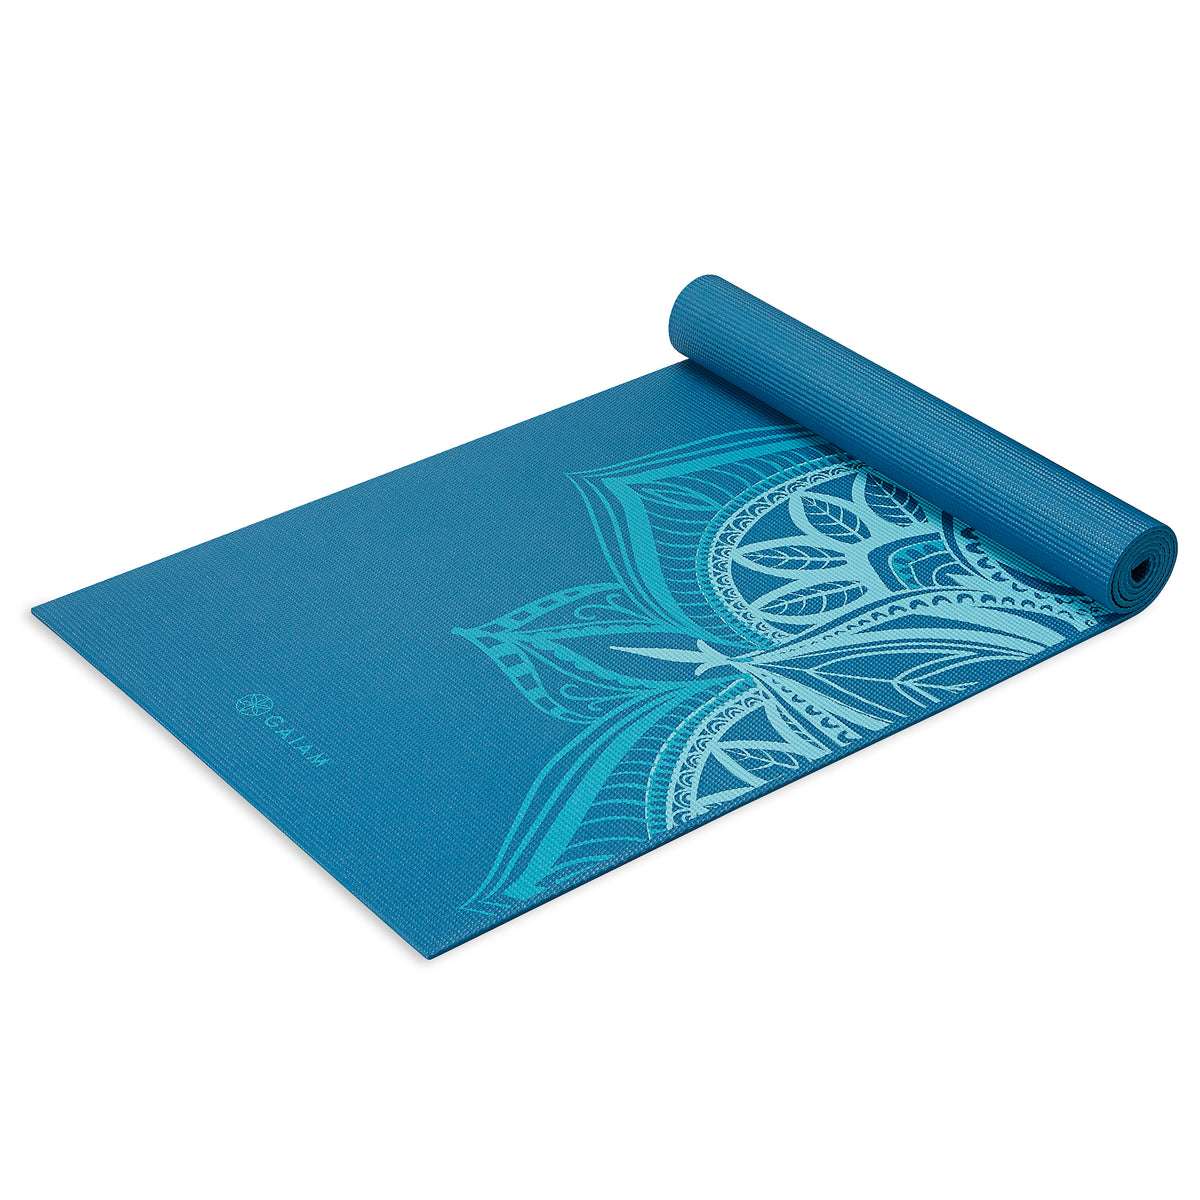 Buy GAIAM Premium Support Yoga Mat 6mm - Sea Glass Print Online